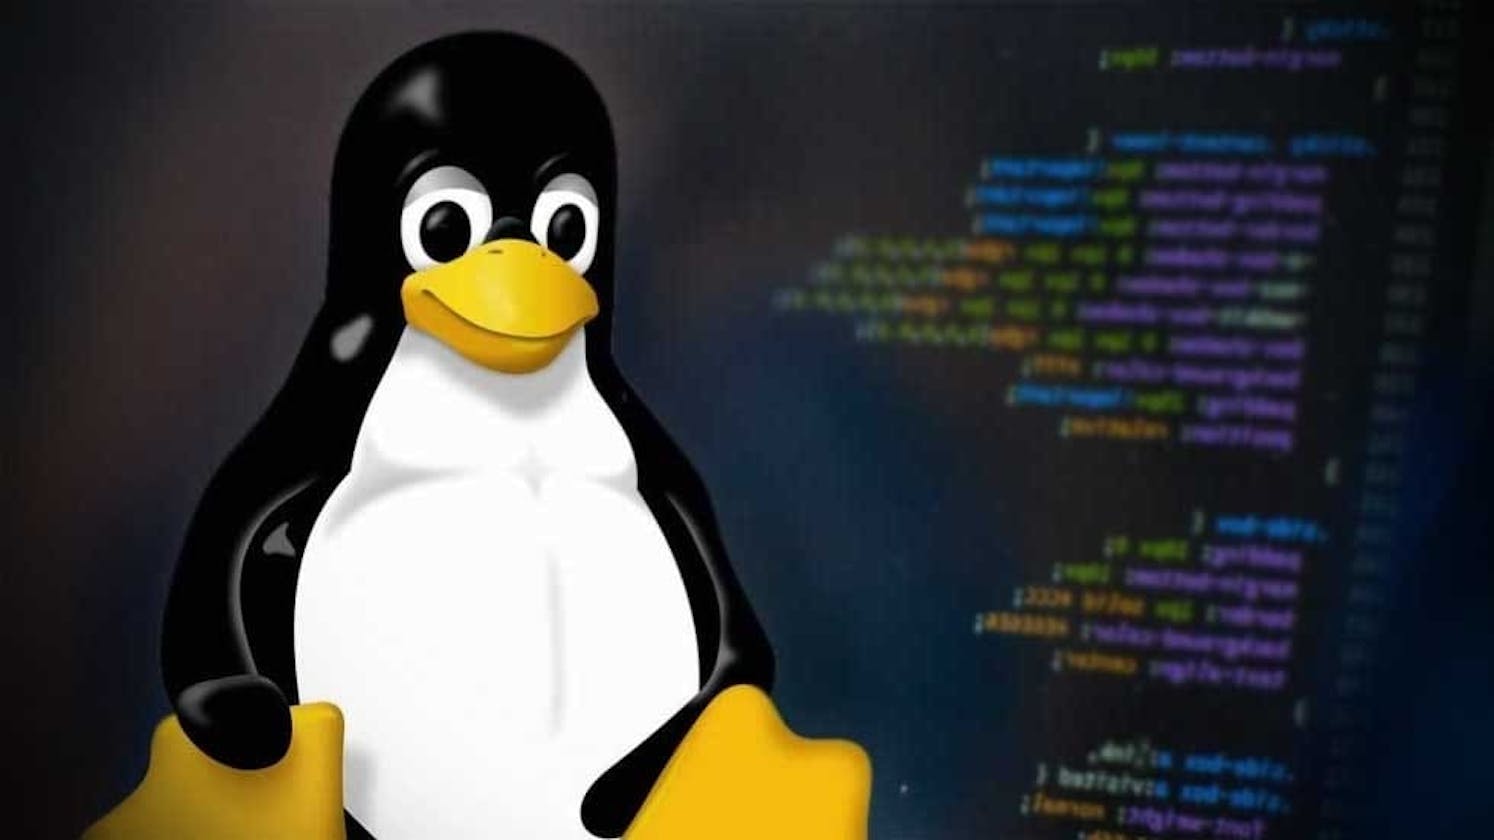 Day 2 - Basics Linux command